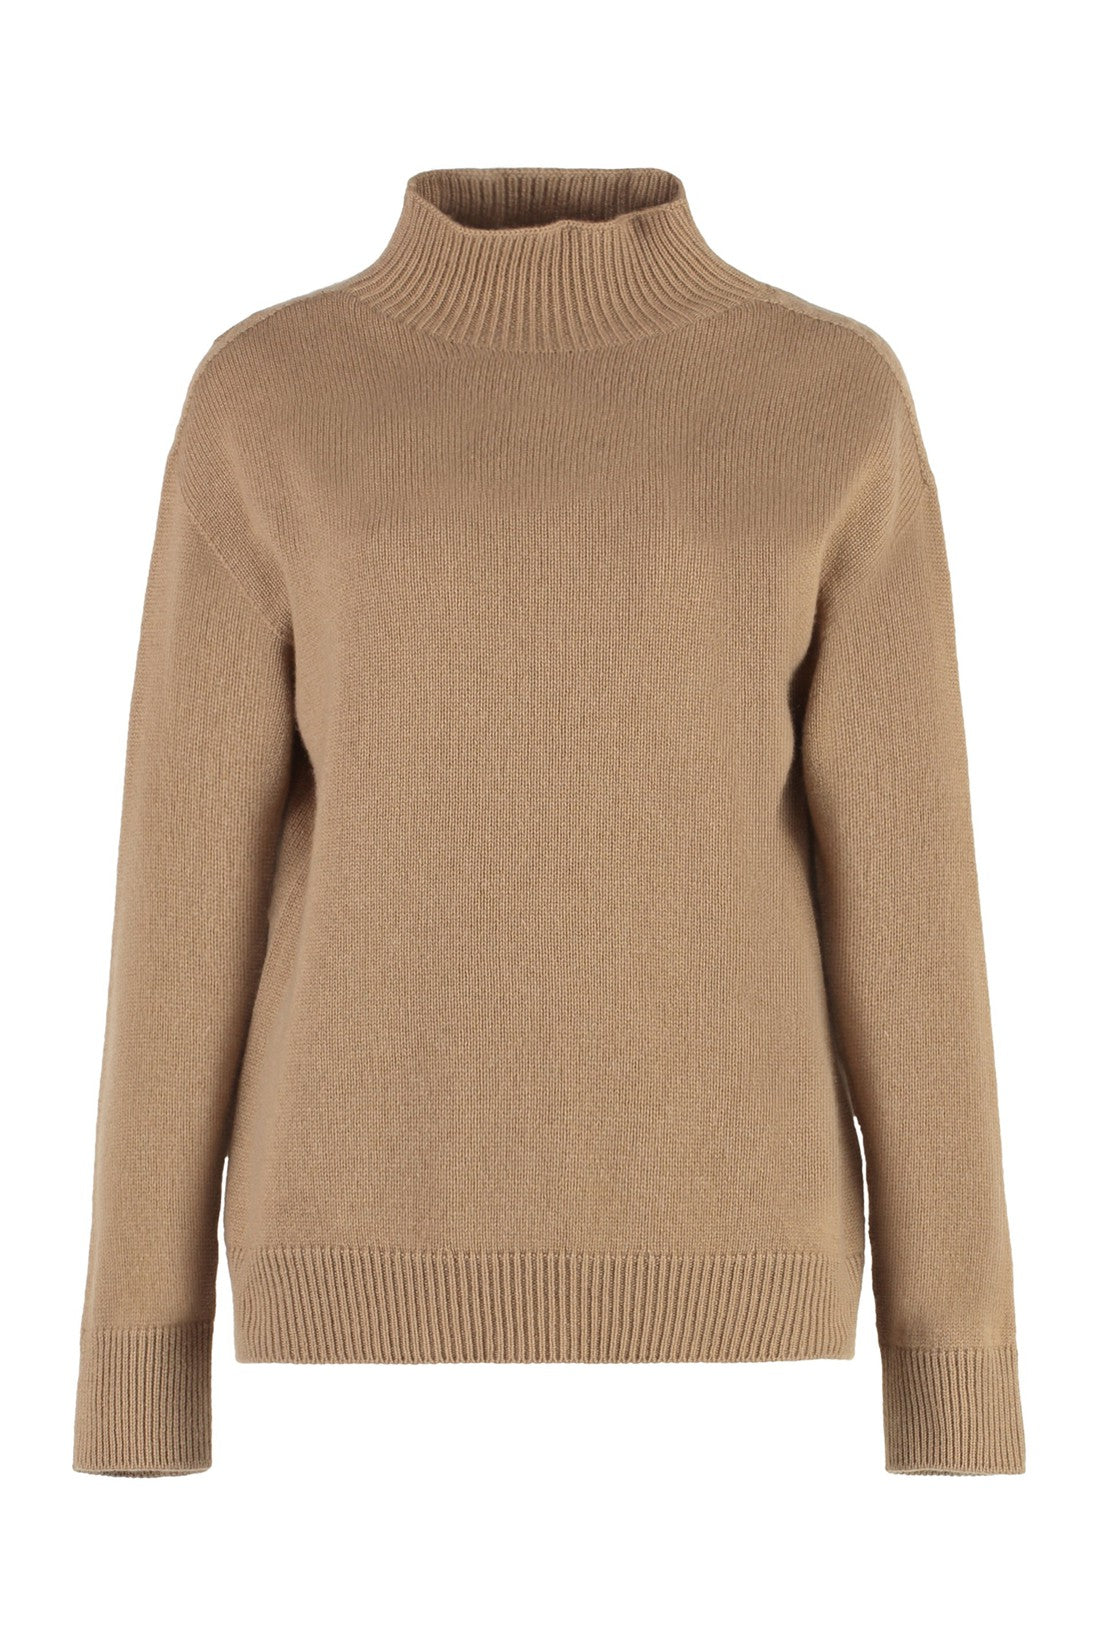 S MAX MARA-OUTLET-SALE-Cashmere turtleneck sweater-ARCHIVIST